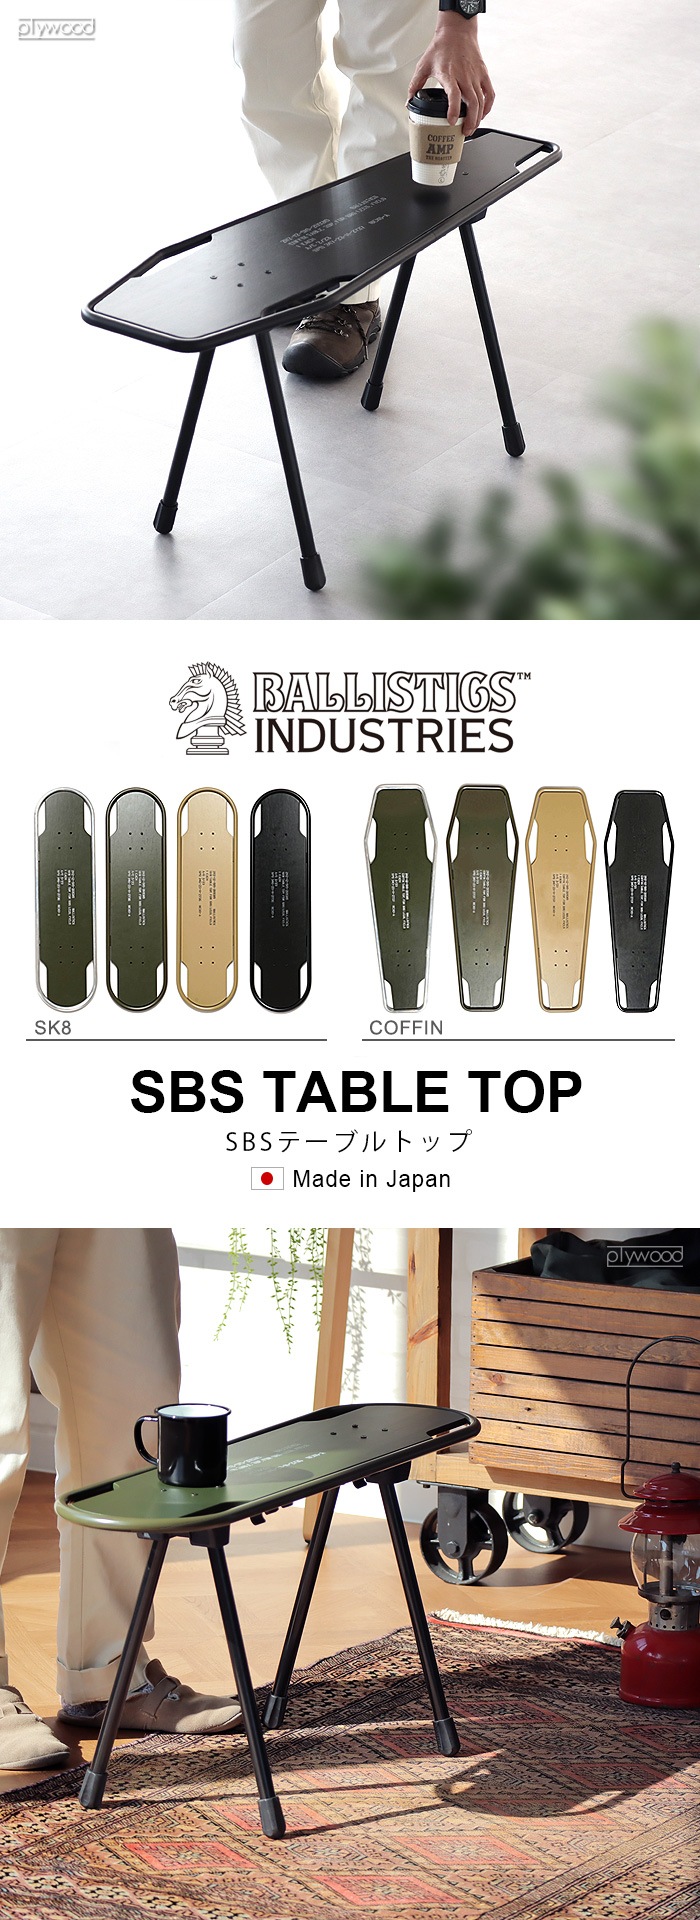 BALLISTICS SBS TABLE TOP SK8 シルバー×OD BAA-2309 [脚別売り 